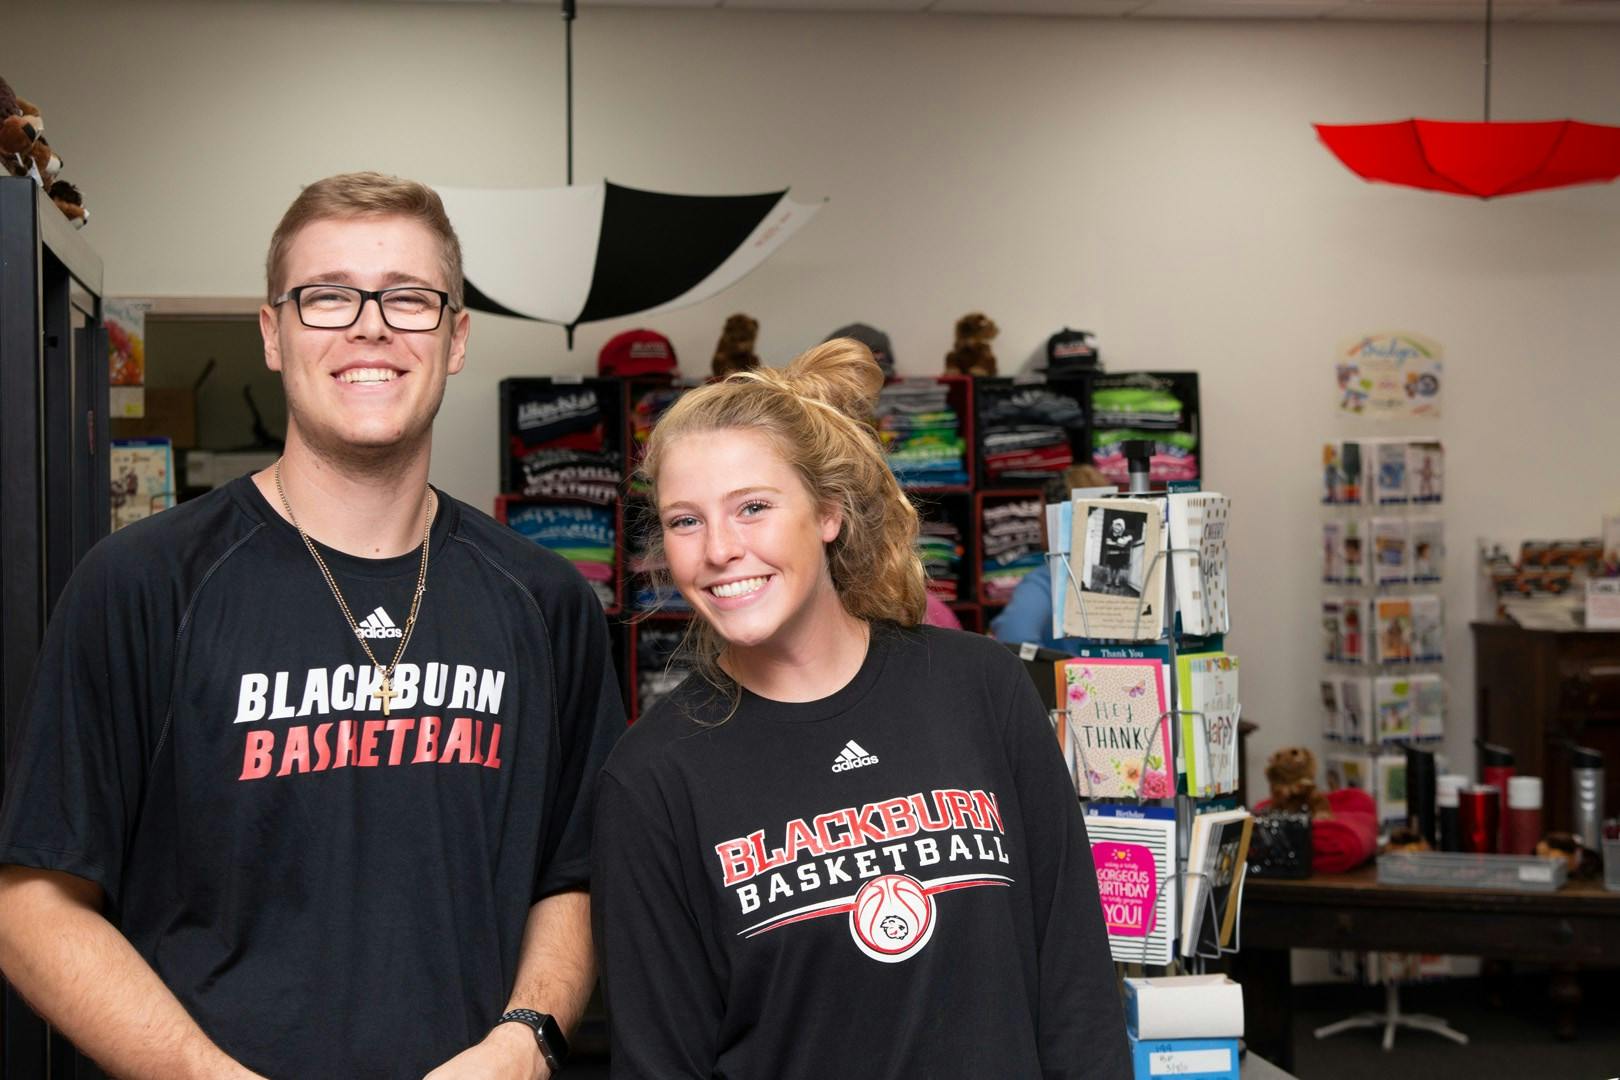 Two students wearing Blackburn College Basketball shirts.